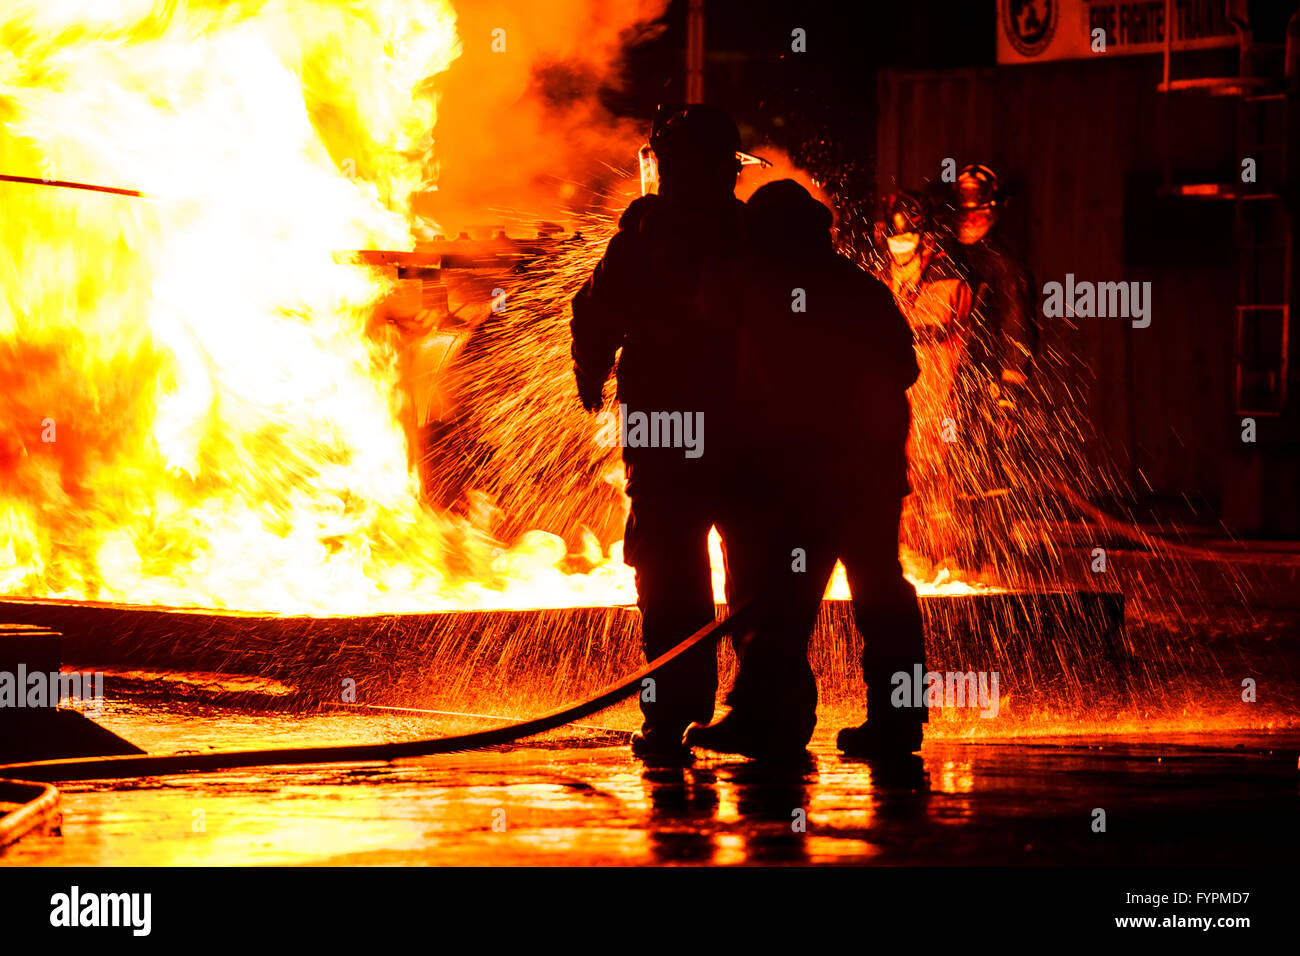 Firemen using water hose on raging fire Stock Photo